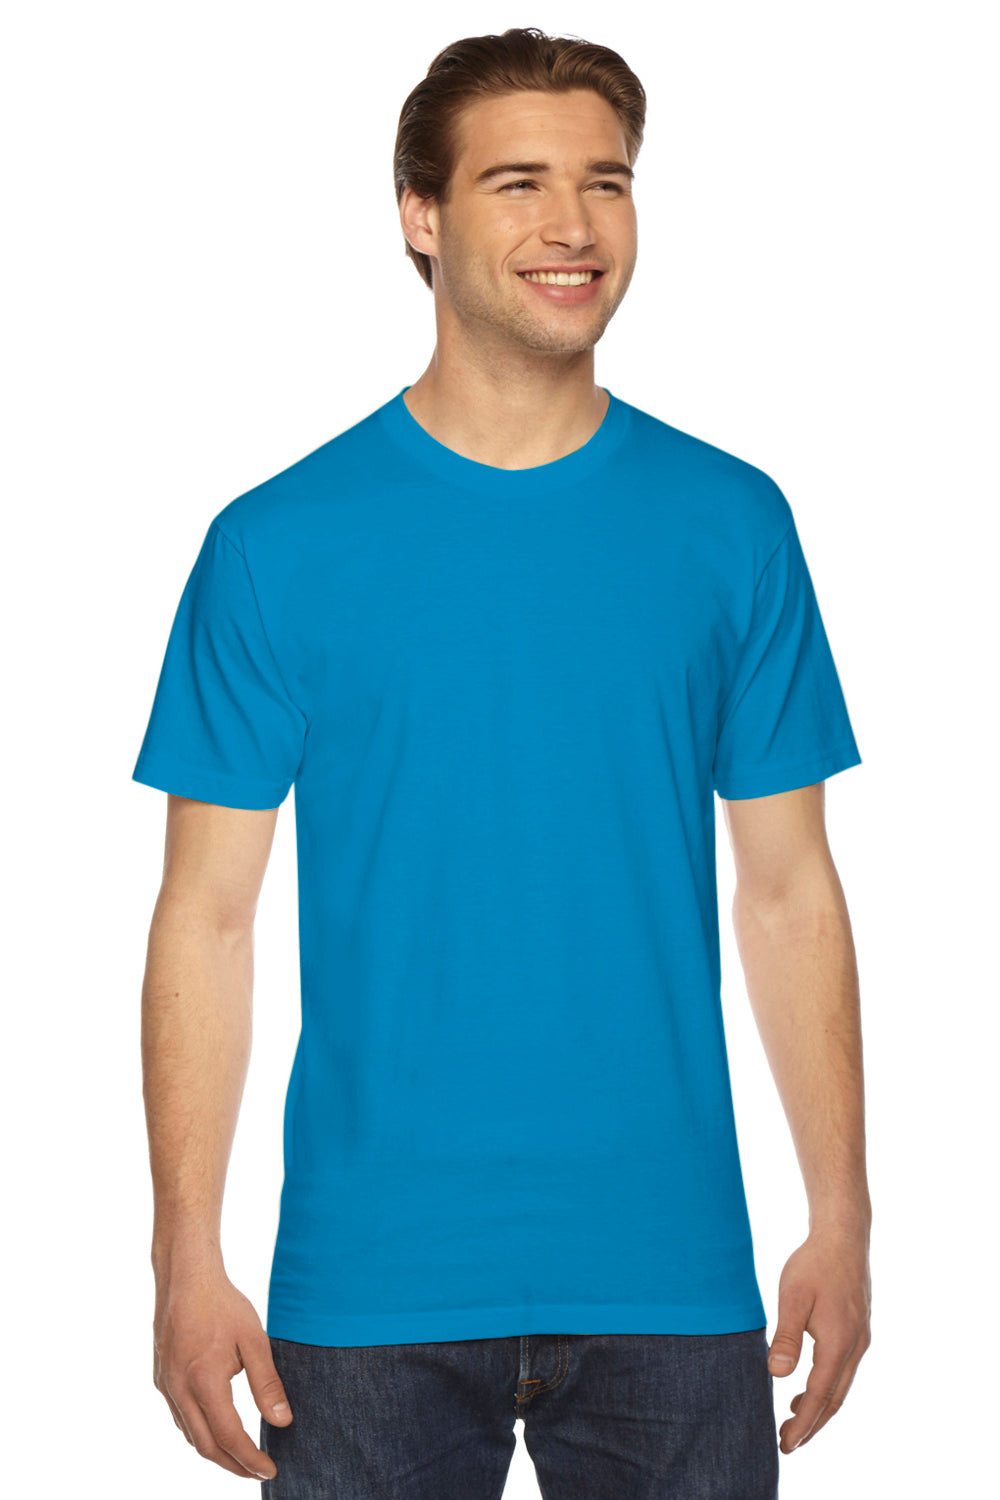 American Apparel 2001 Mens USA Made Fine Jersey Short Sleeve Crewneck T-Shirt Teal Blue Front